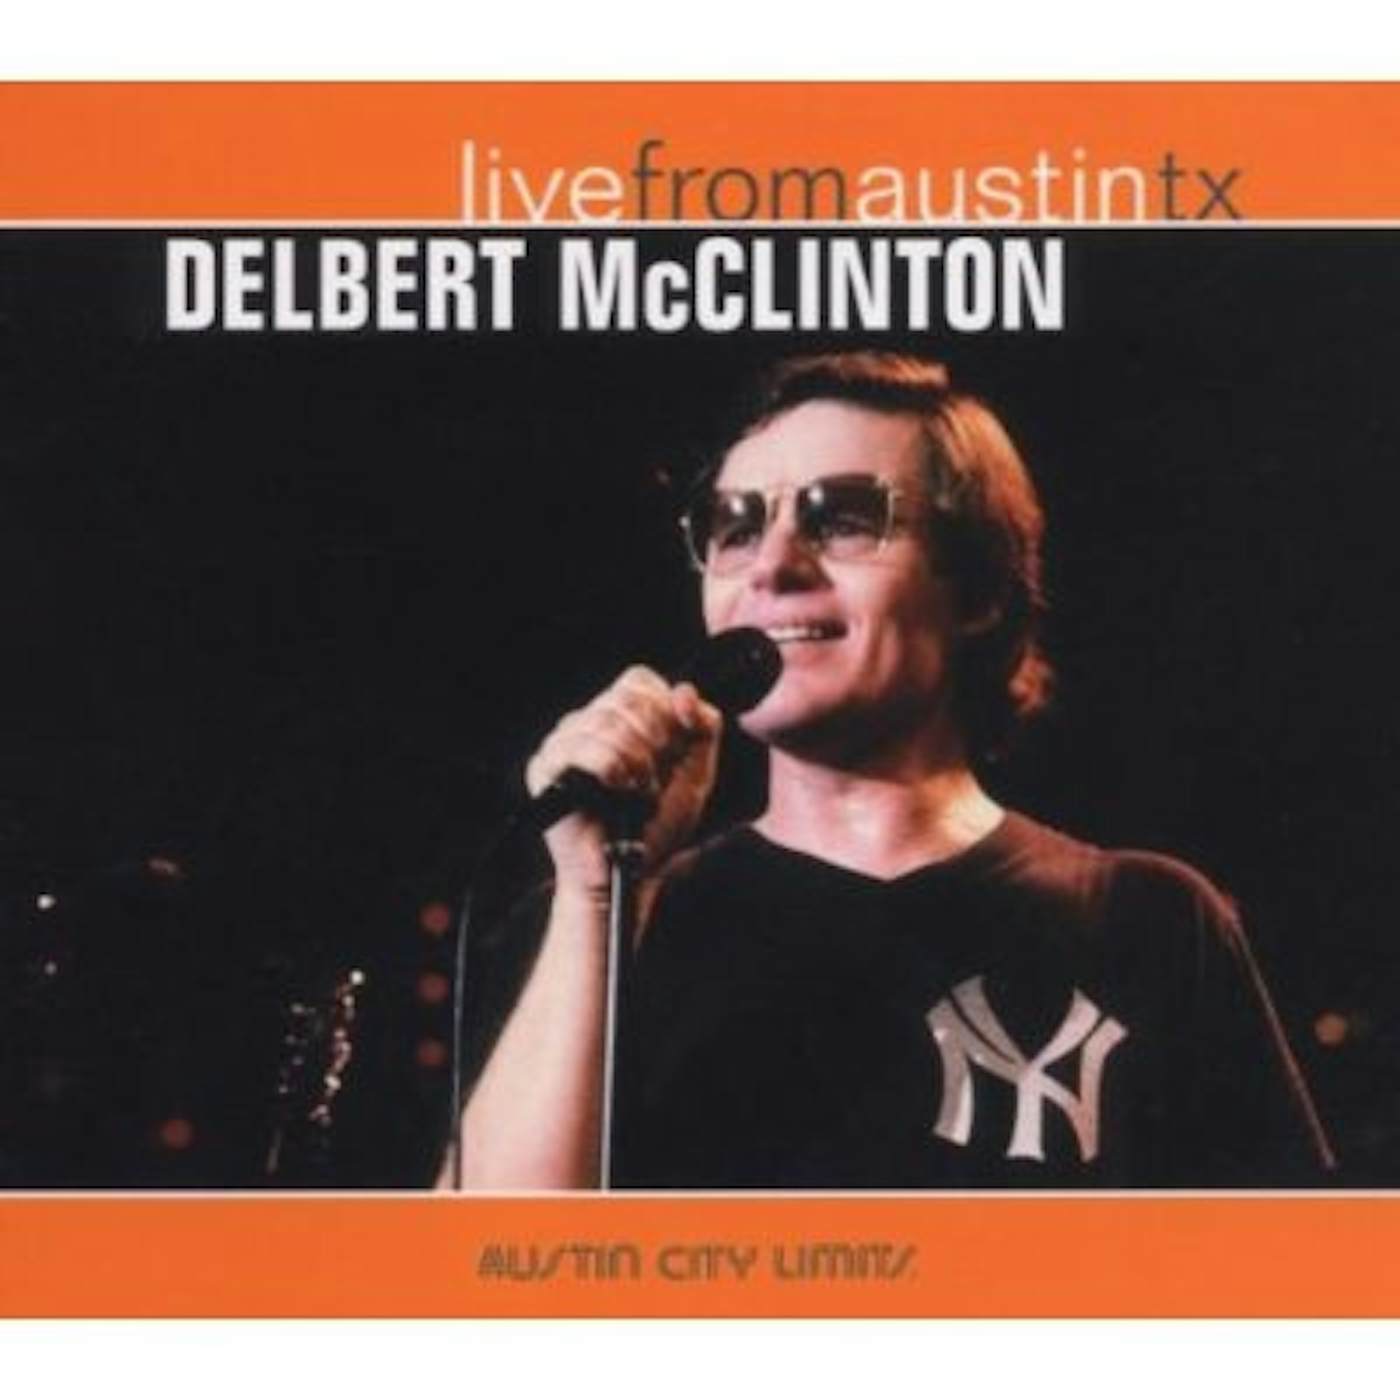 Delbert McClinton LIVE FROM AUSTIN TX CD